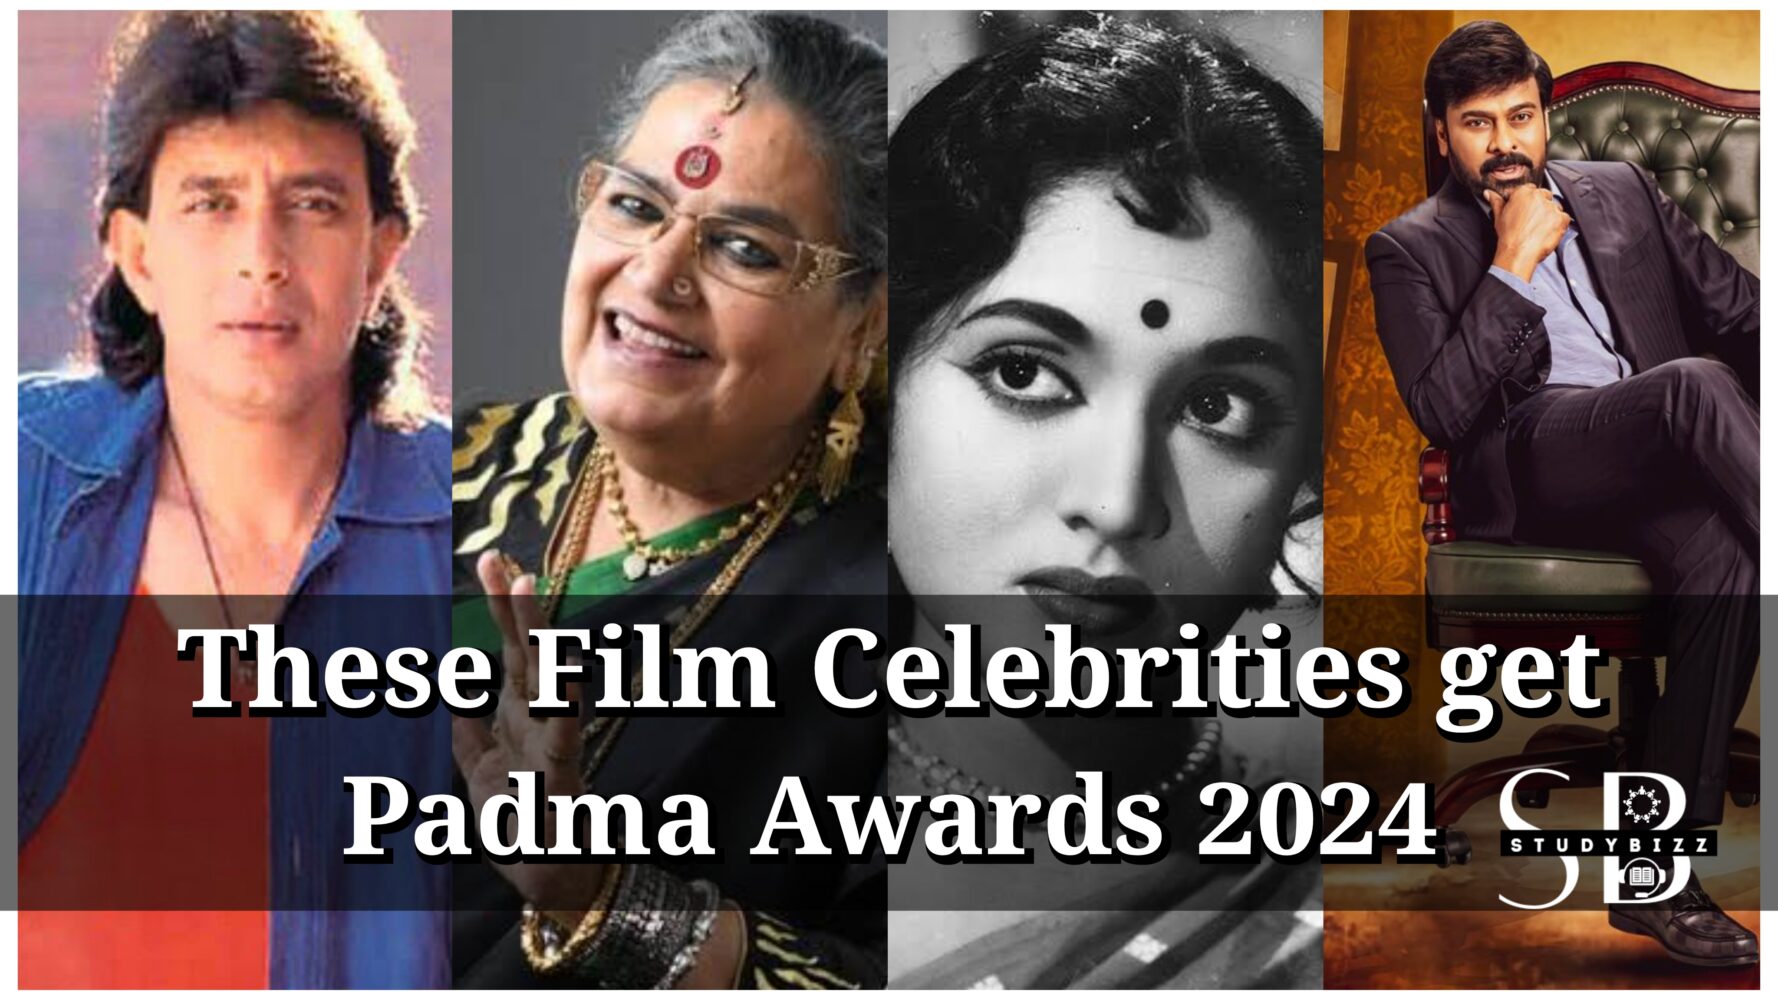 These Film Celebrities get Padma Awards 2024